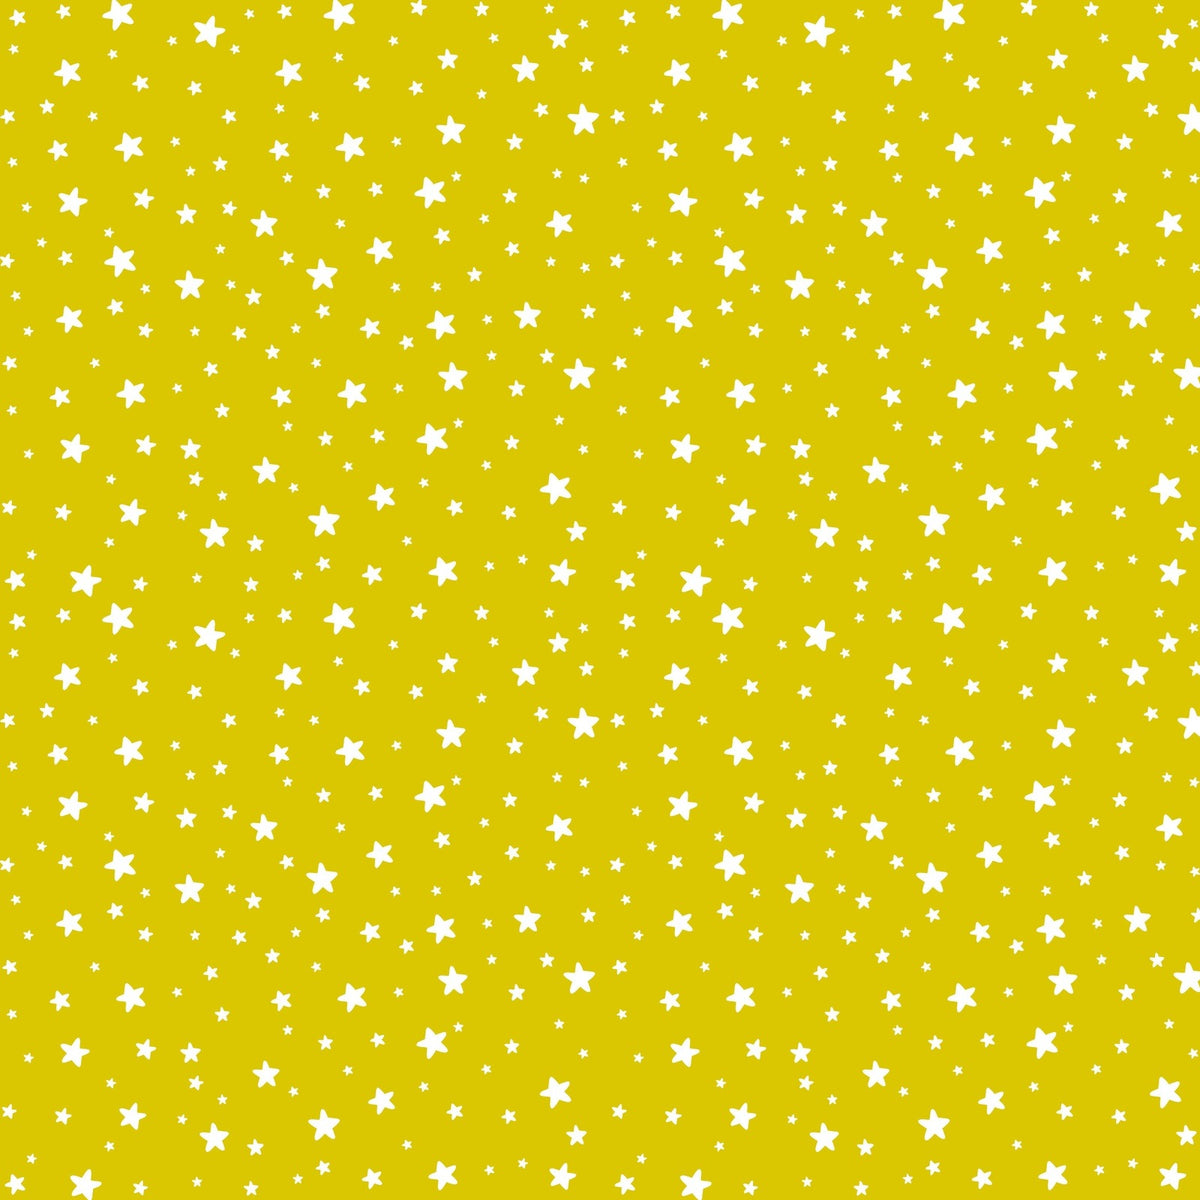 Starlight Bright Re-Mixed 6x6 Paper Pad